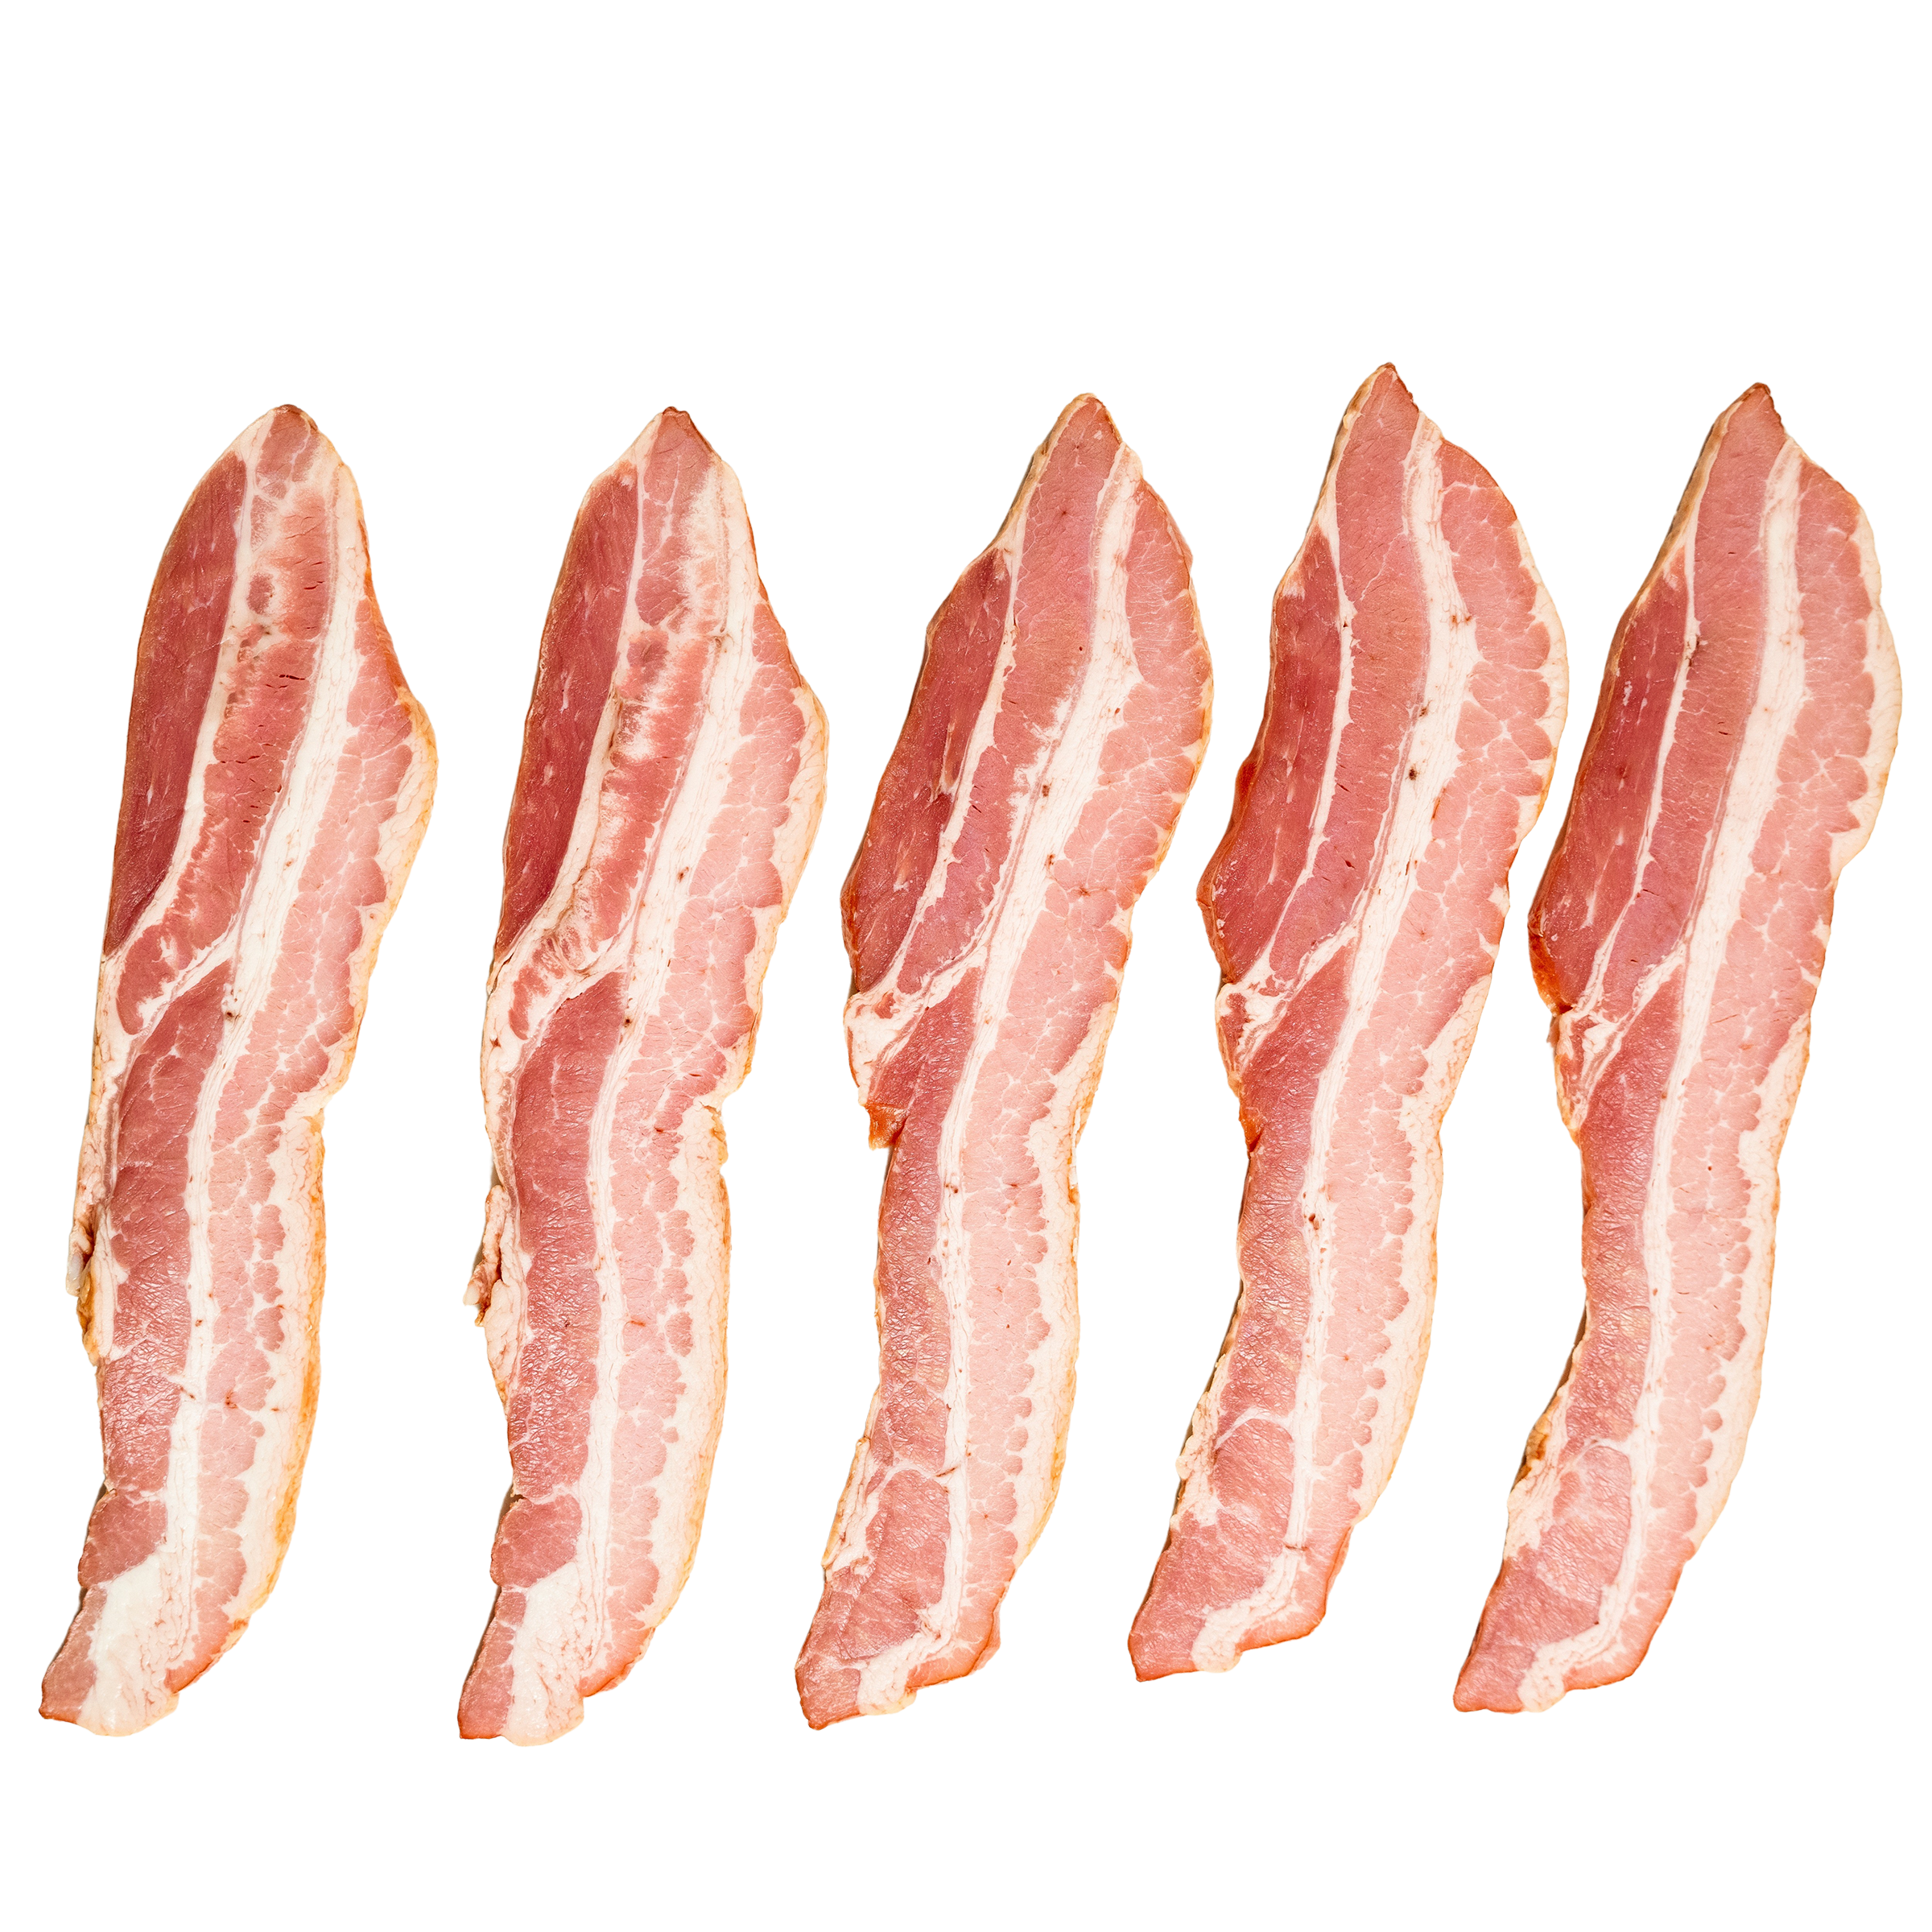 Kurobuta Bacon